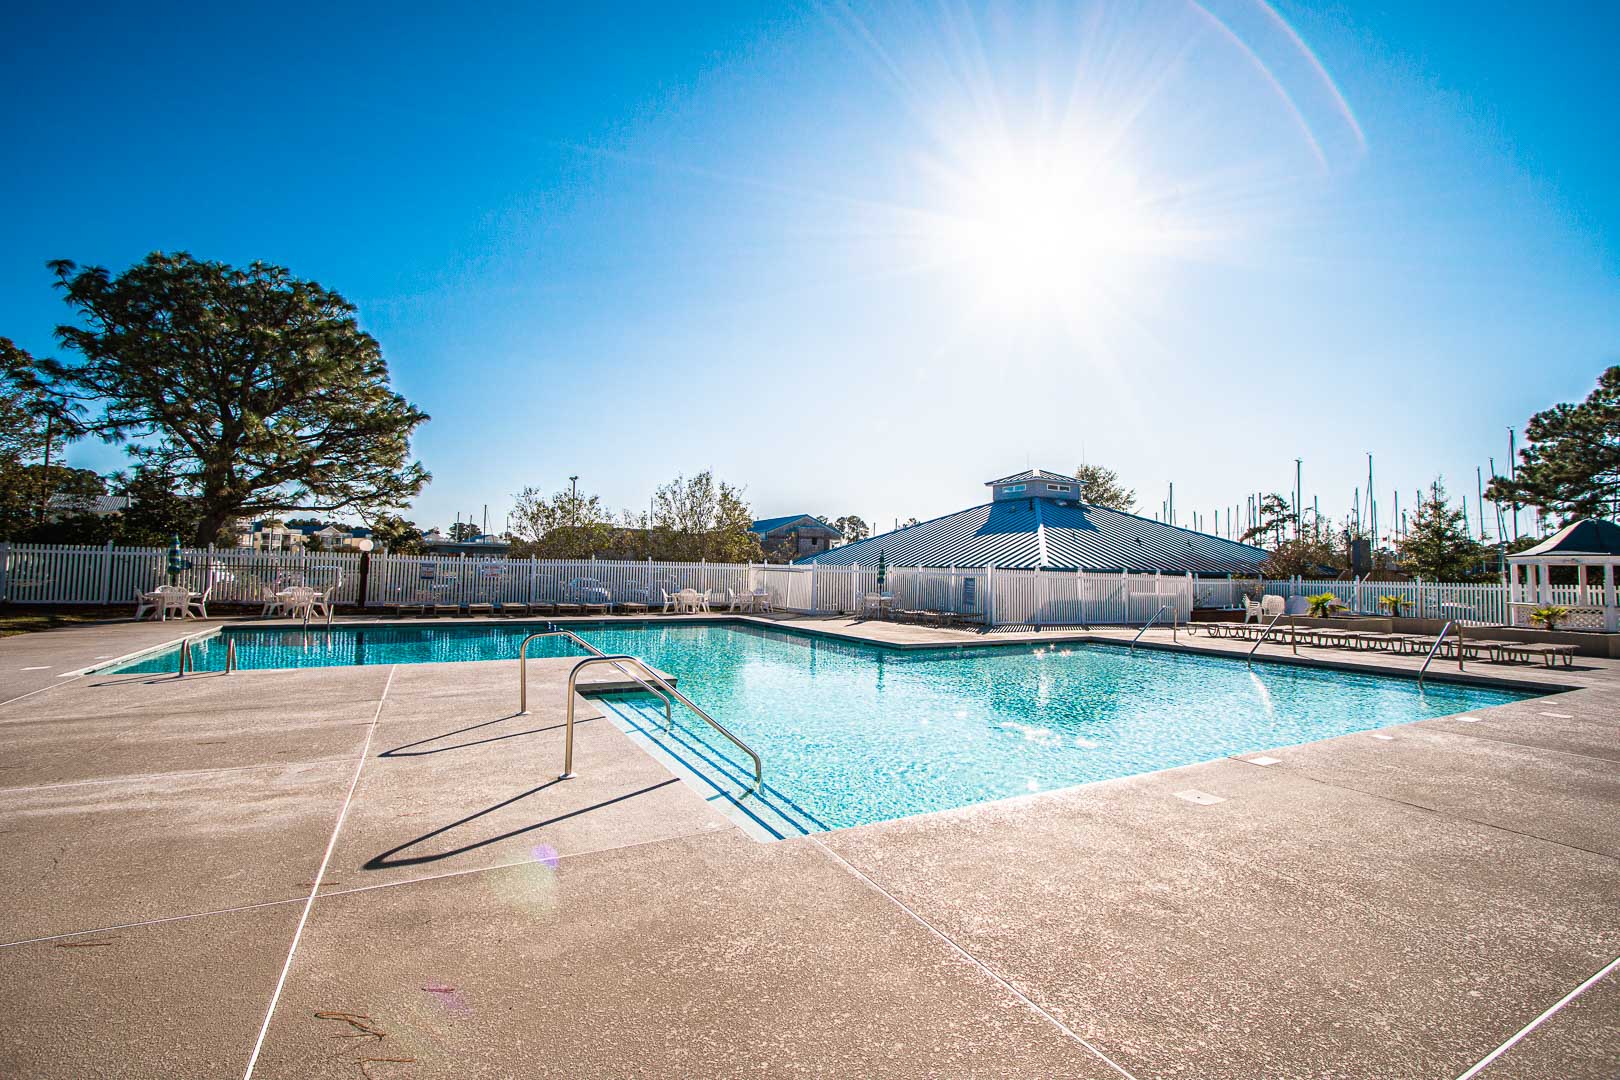 A crisp outdoor swimming pool at VRI's Sandcastle Village in New Bern, North Carolina.